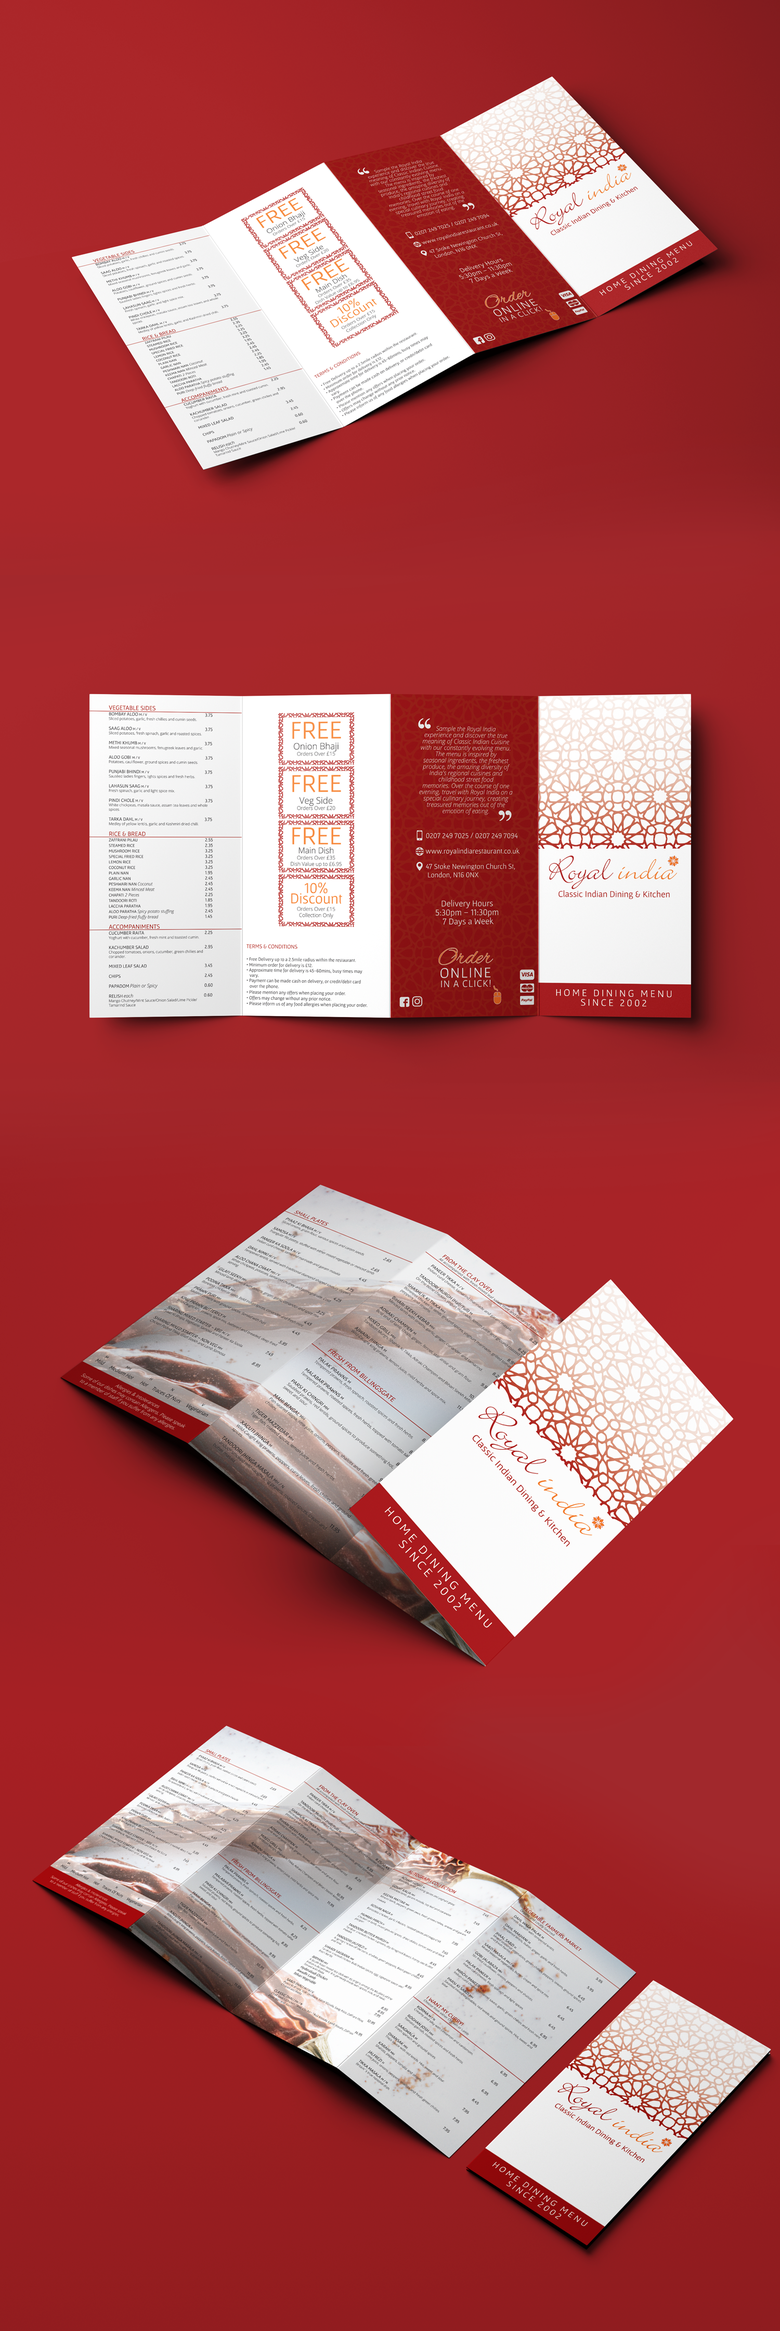 Brochure and flyer designs